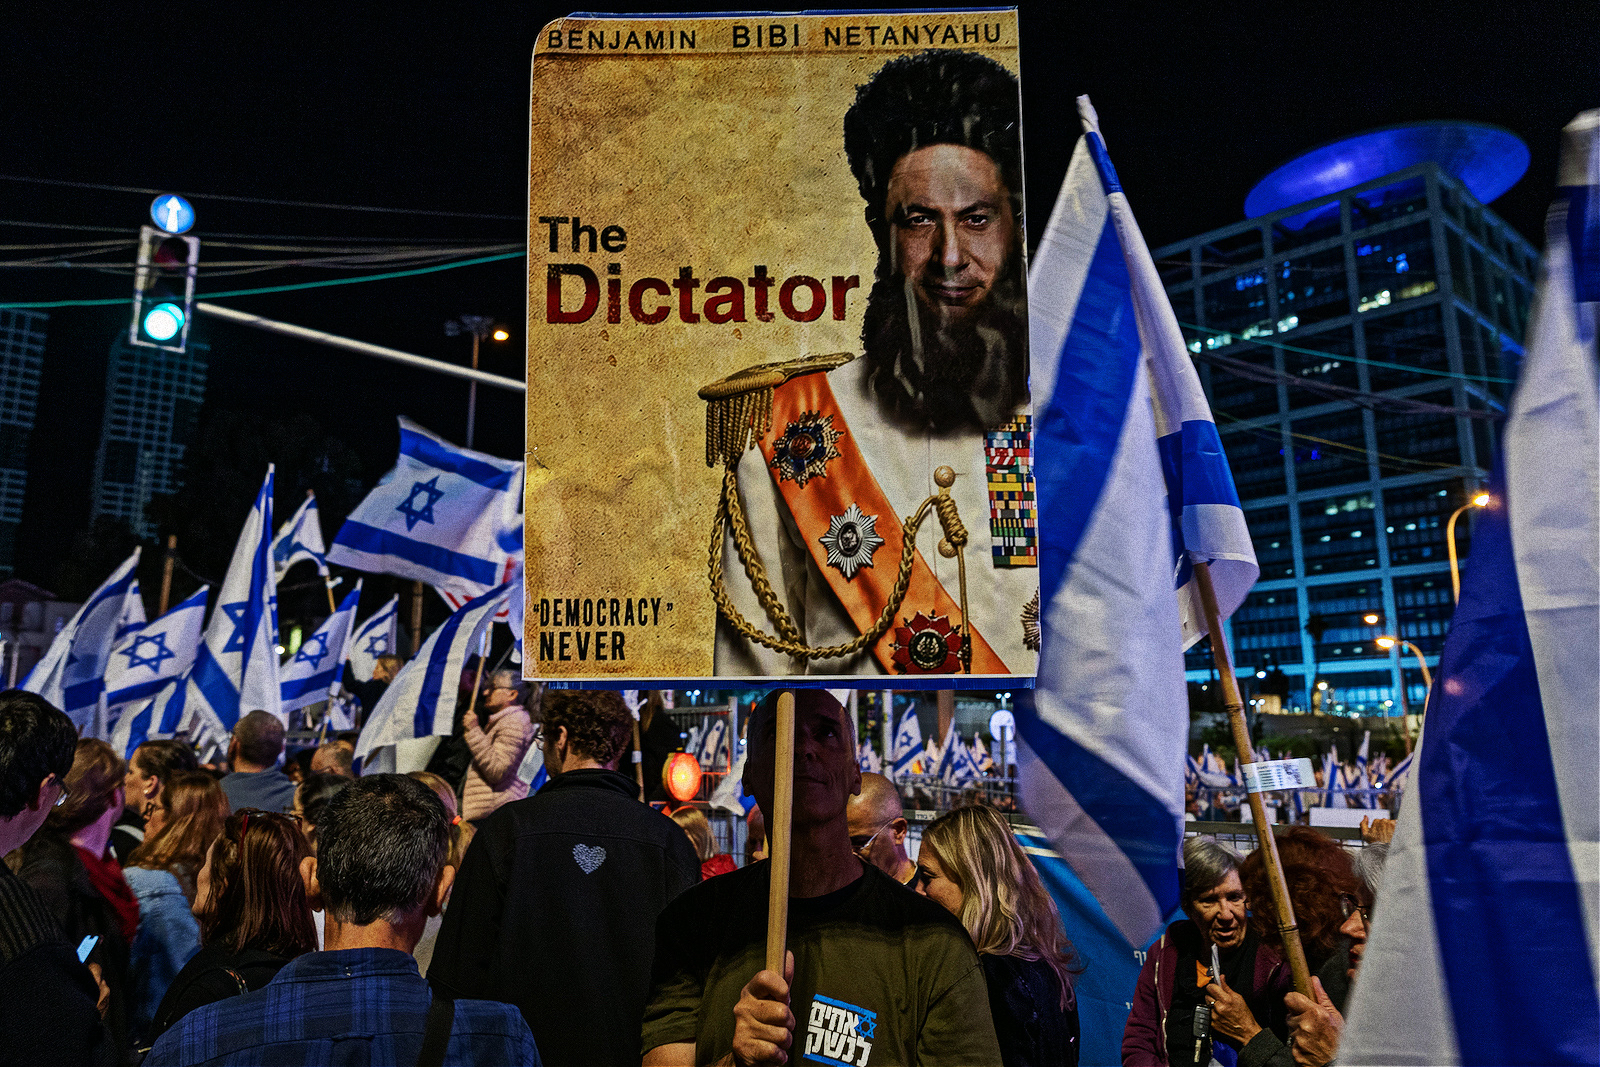 Israelis protesting Netanyahu's judicial overhaul